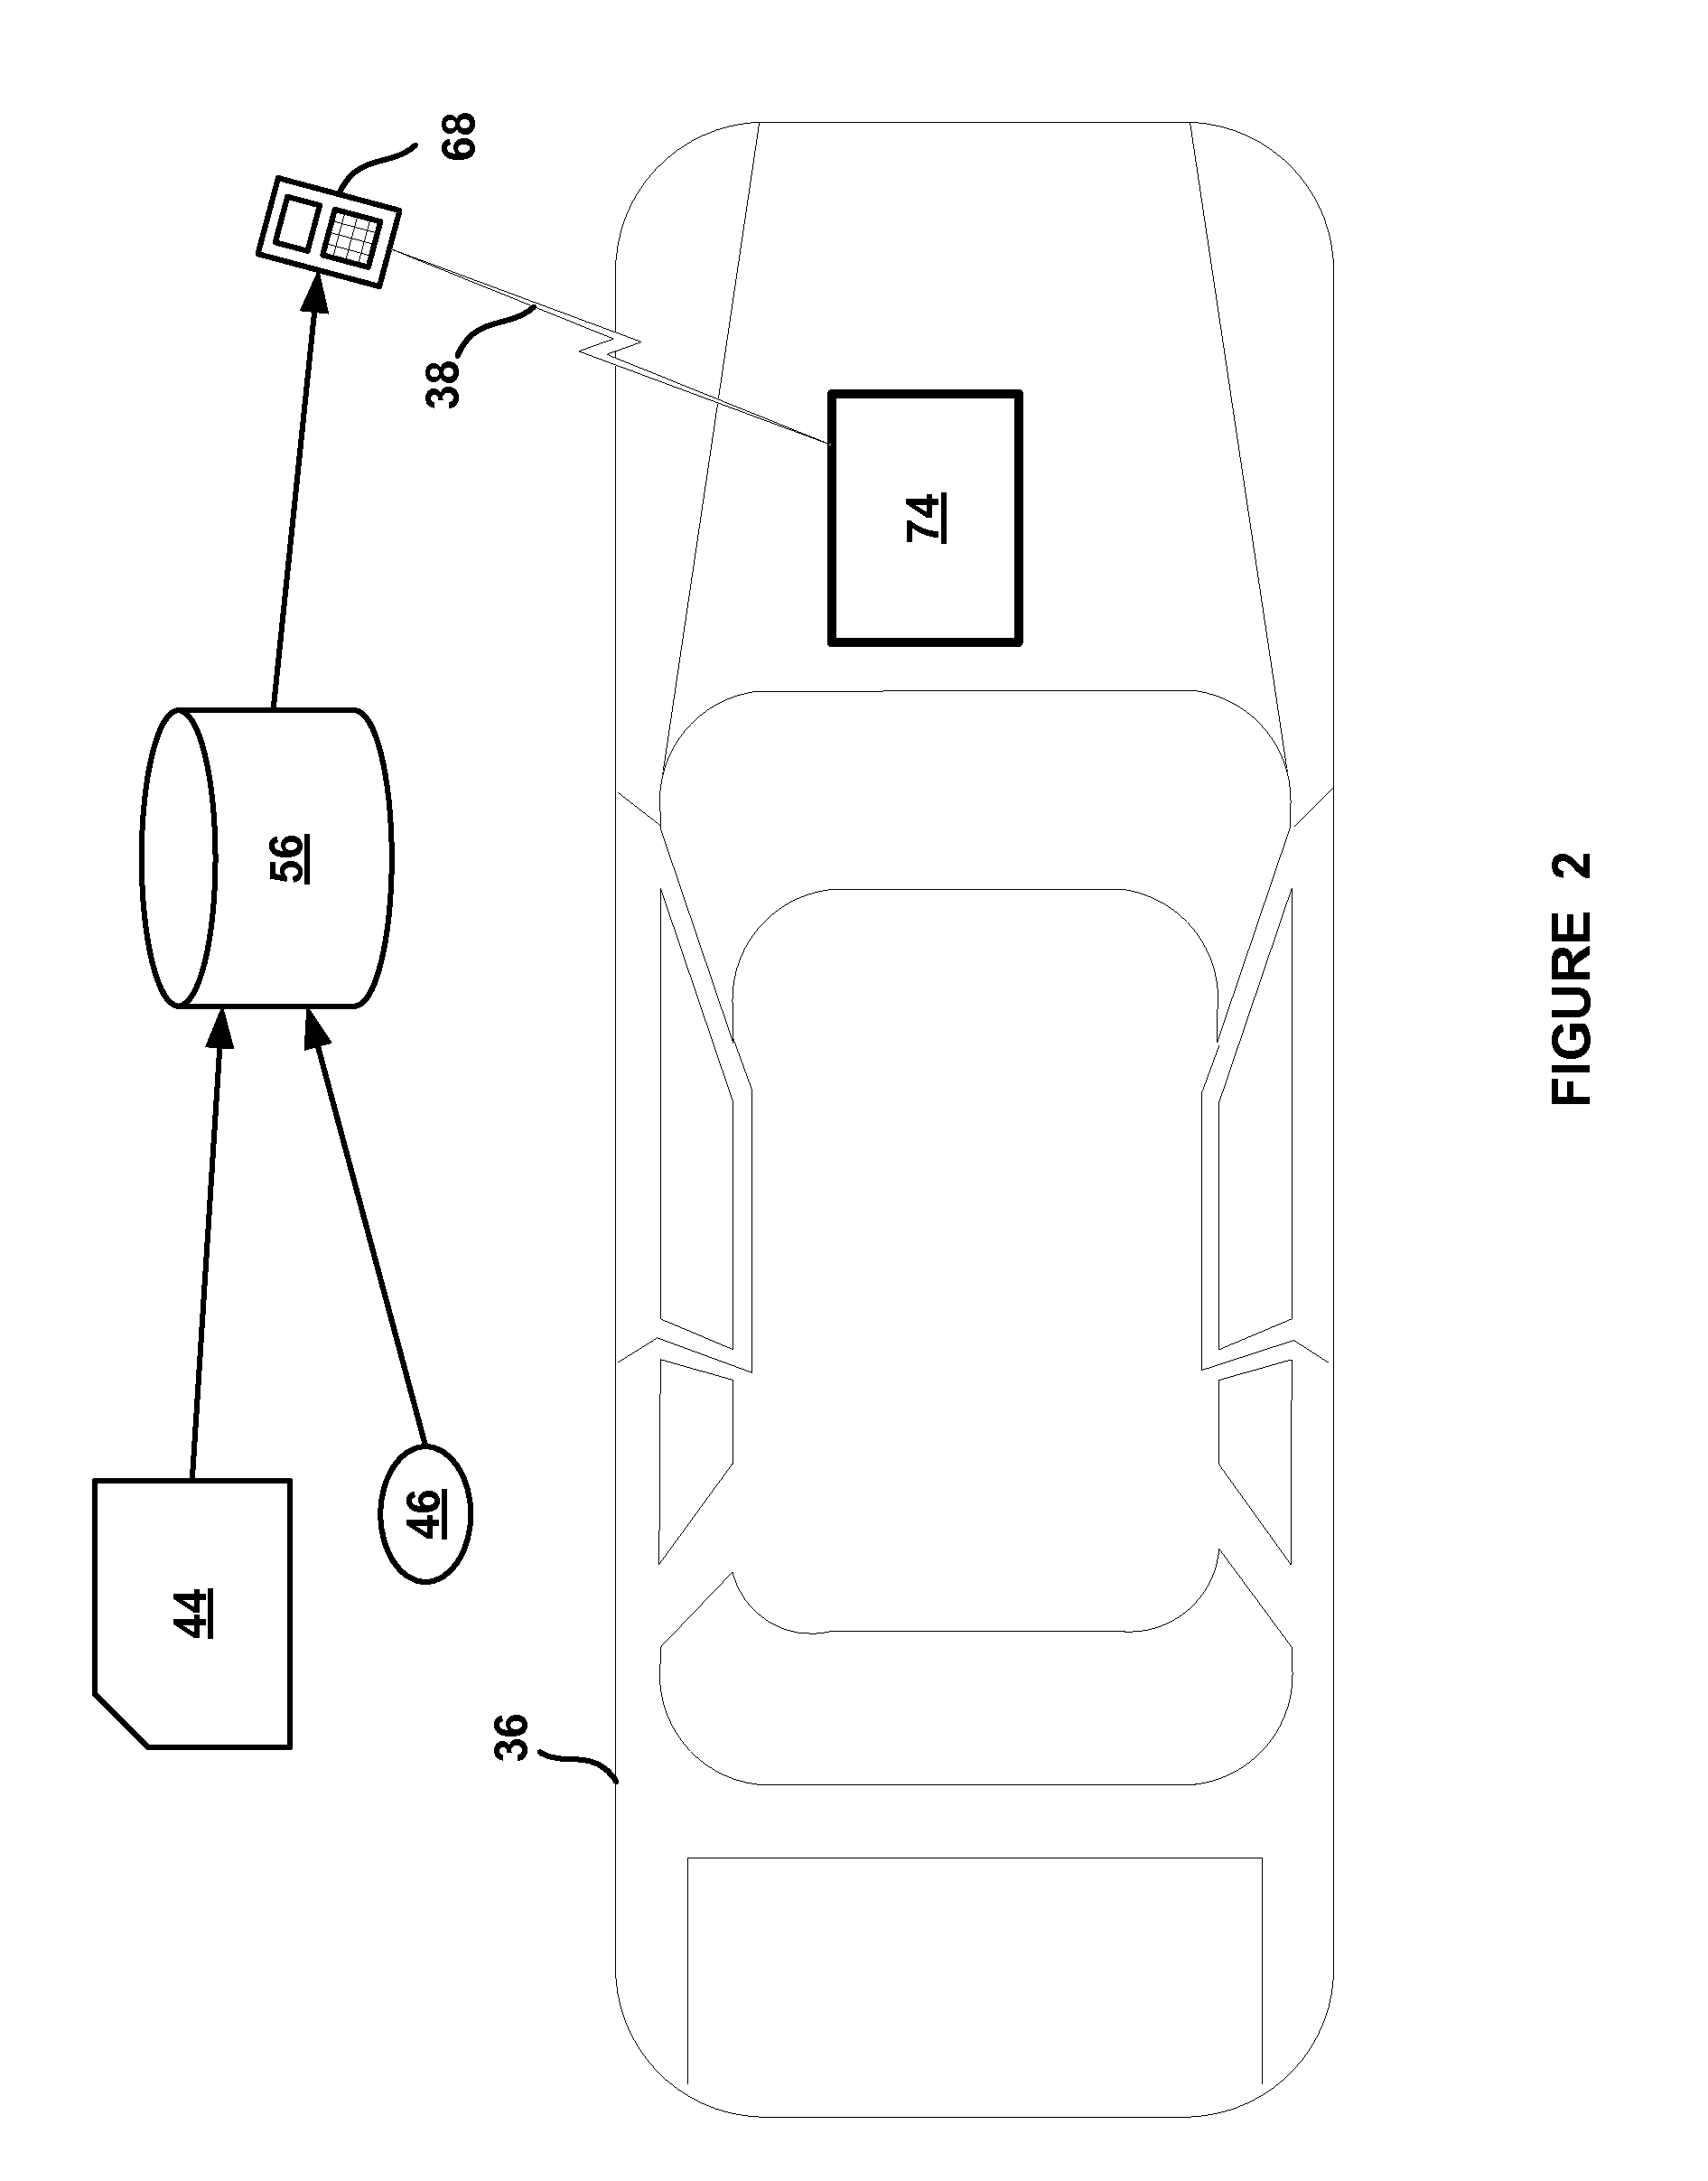 Method for partial flashing of ecus